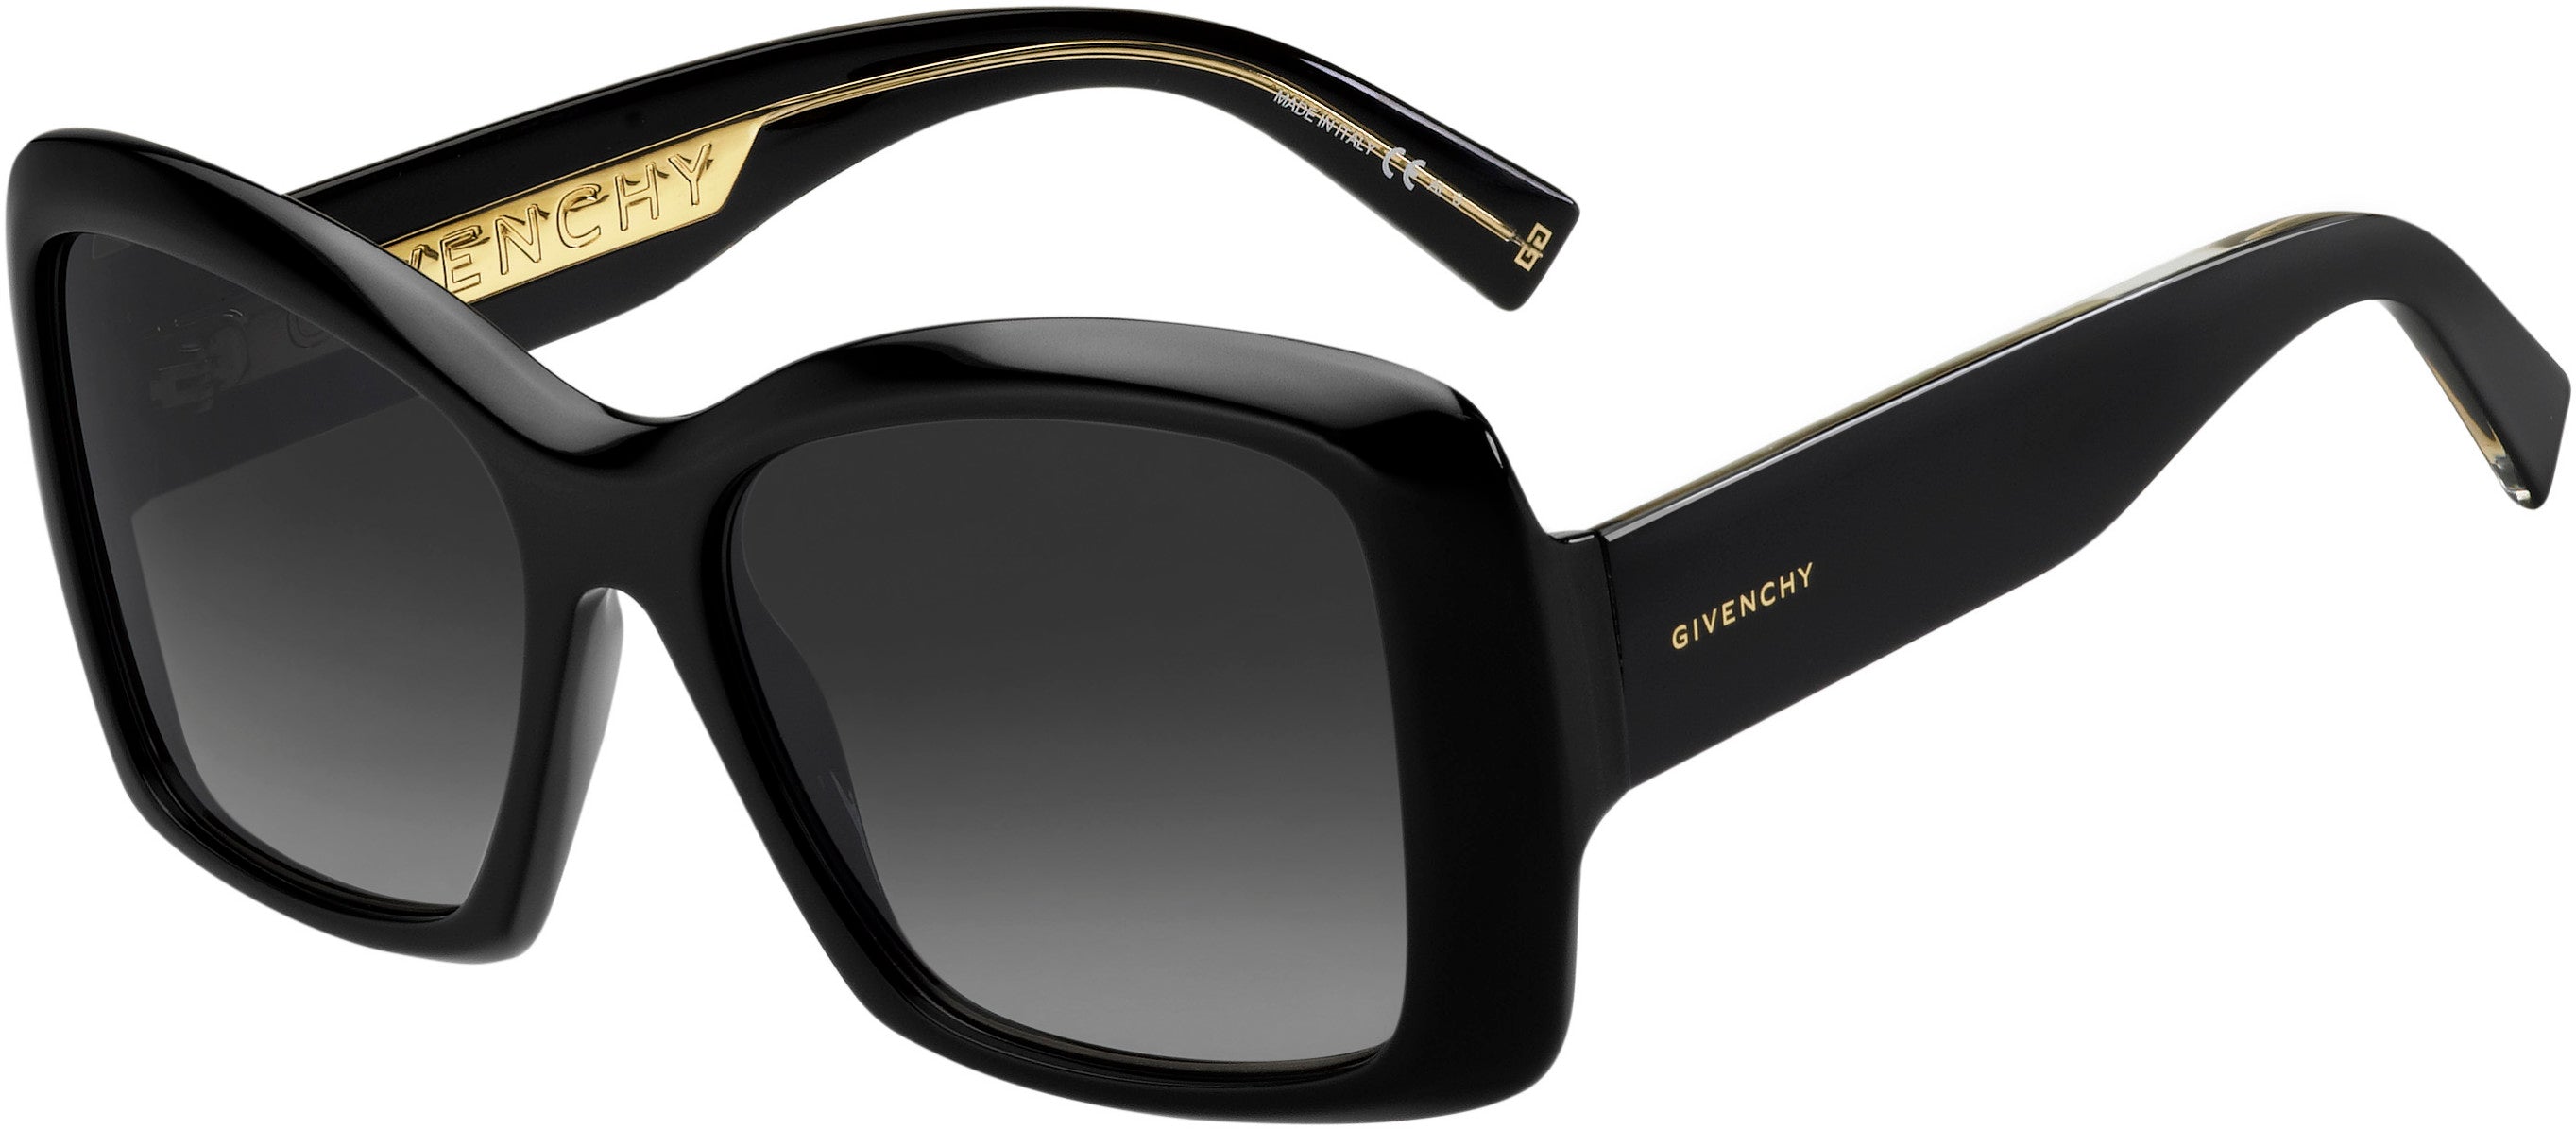  Givenchy 7186/S Square Sunglasses 0807-0807  Black (9O Dark Gray Gradient)